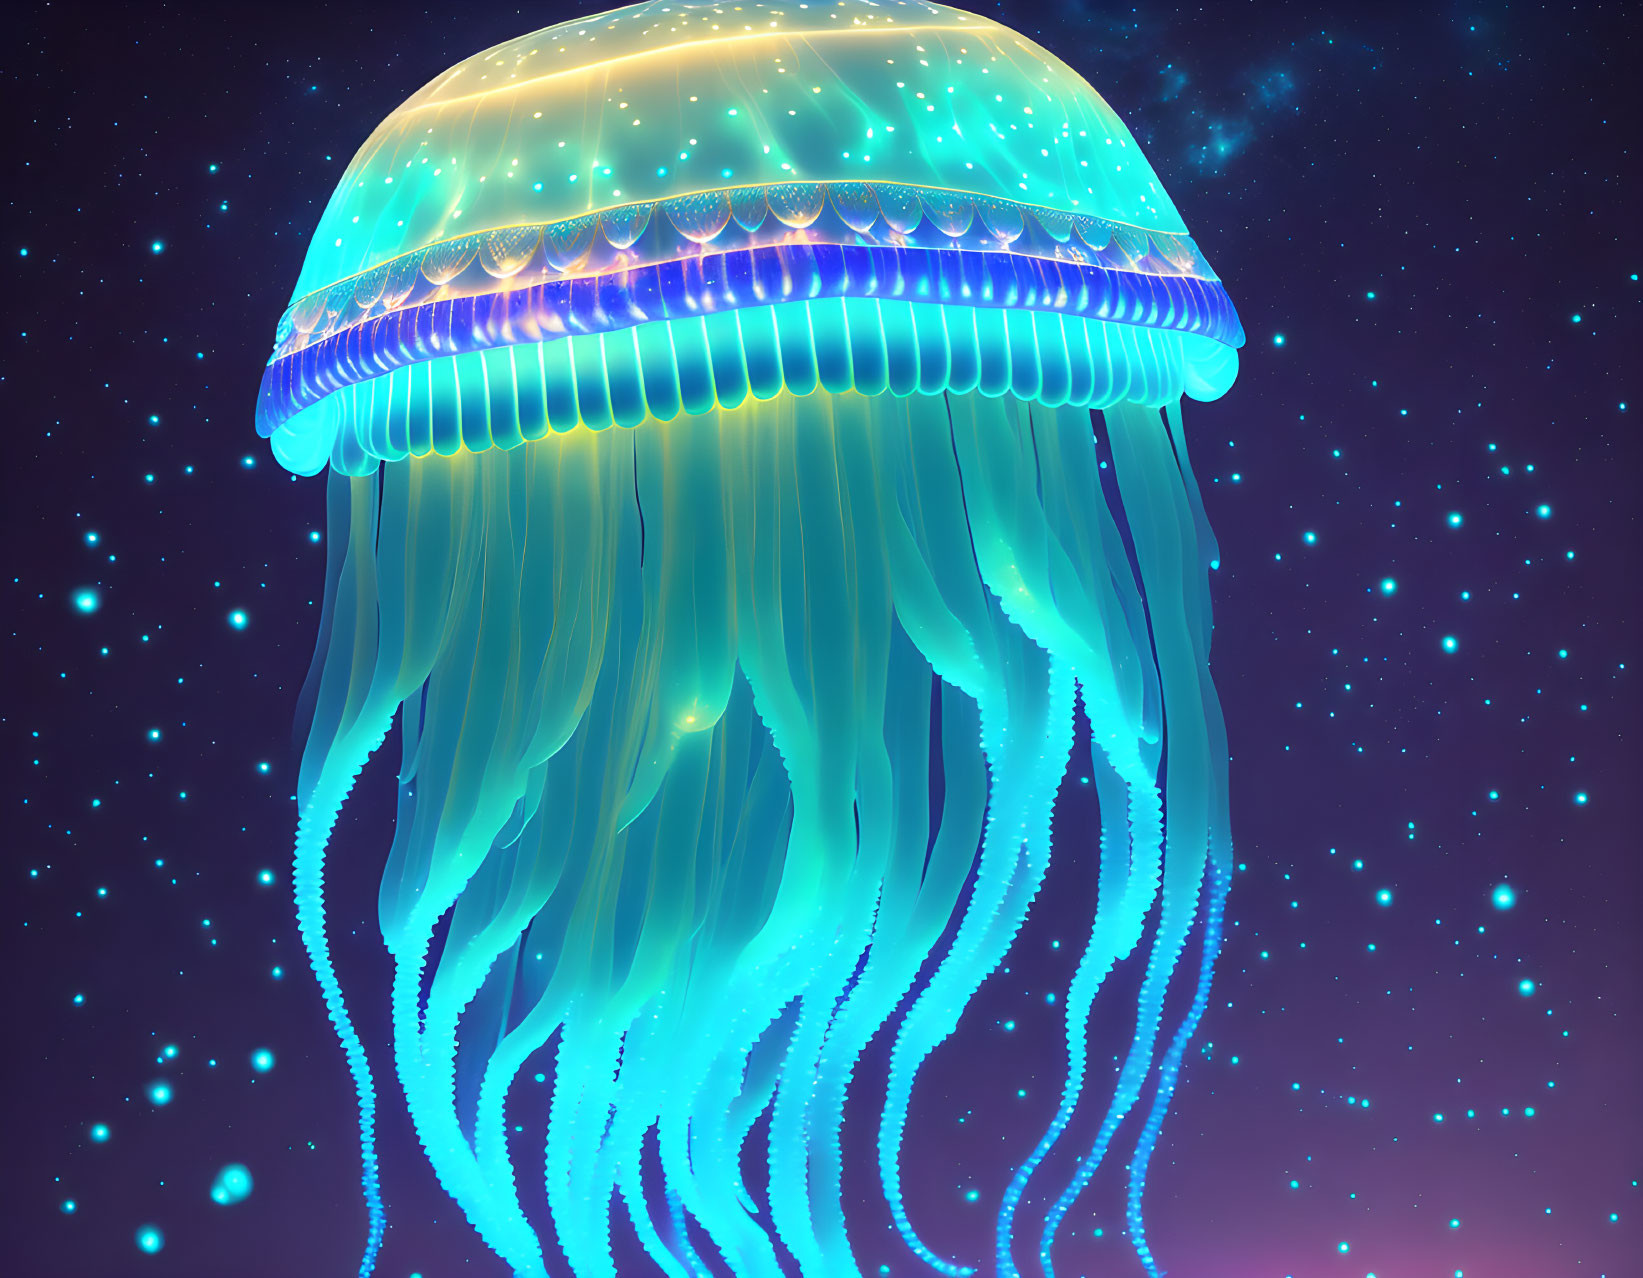 Luminous digital art jellyfish in blue and purple hues on starry night sky.